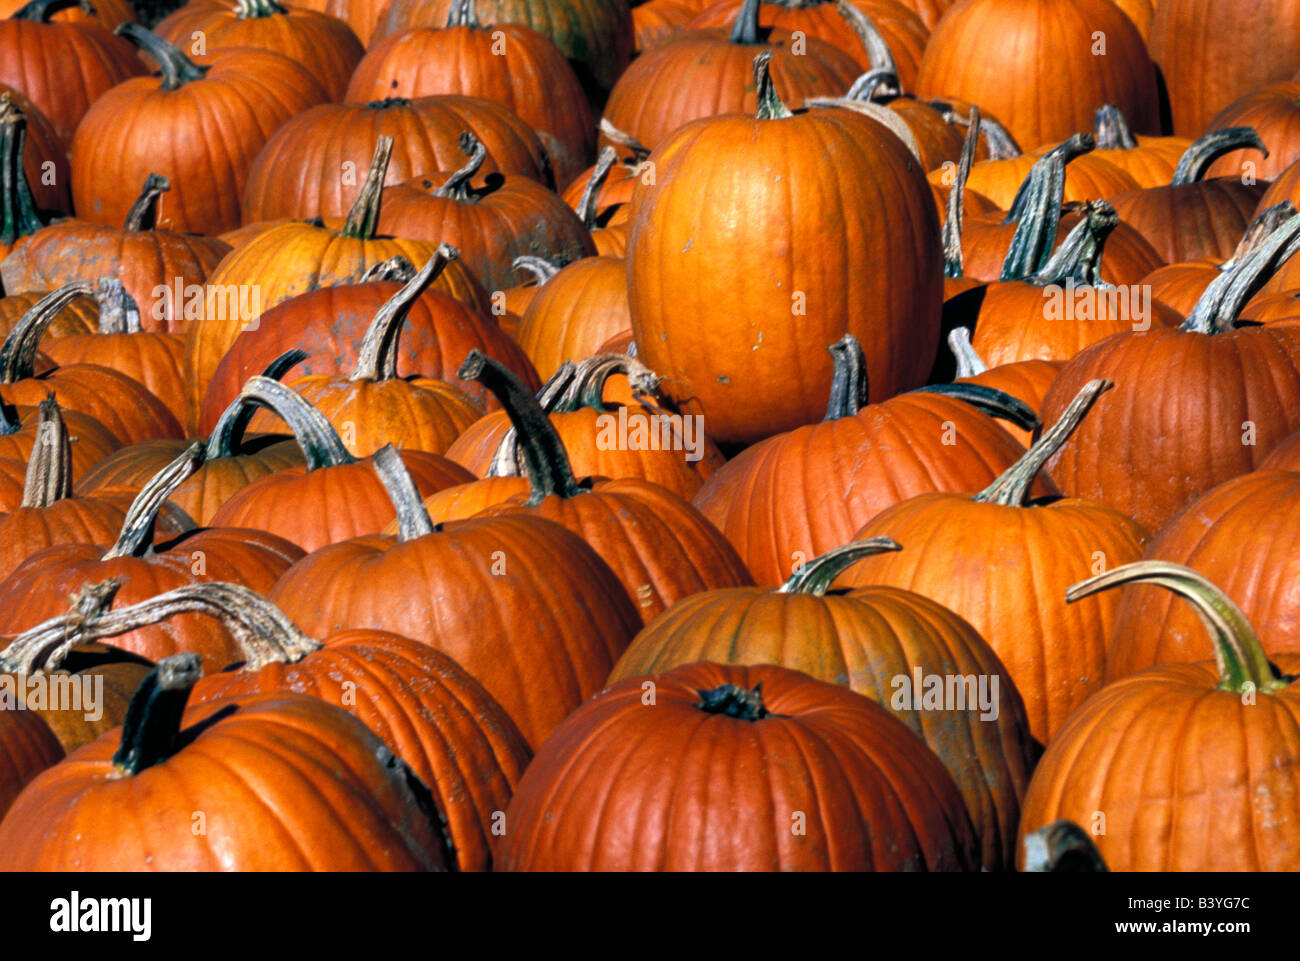 North America, United States, New England. Fall pumpkins. Stock Photo